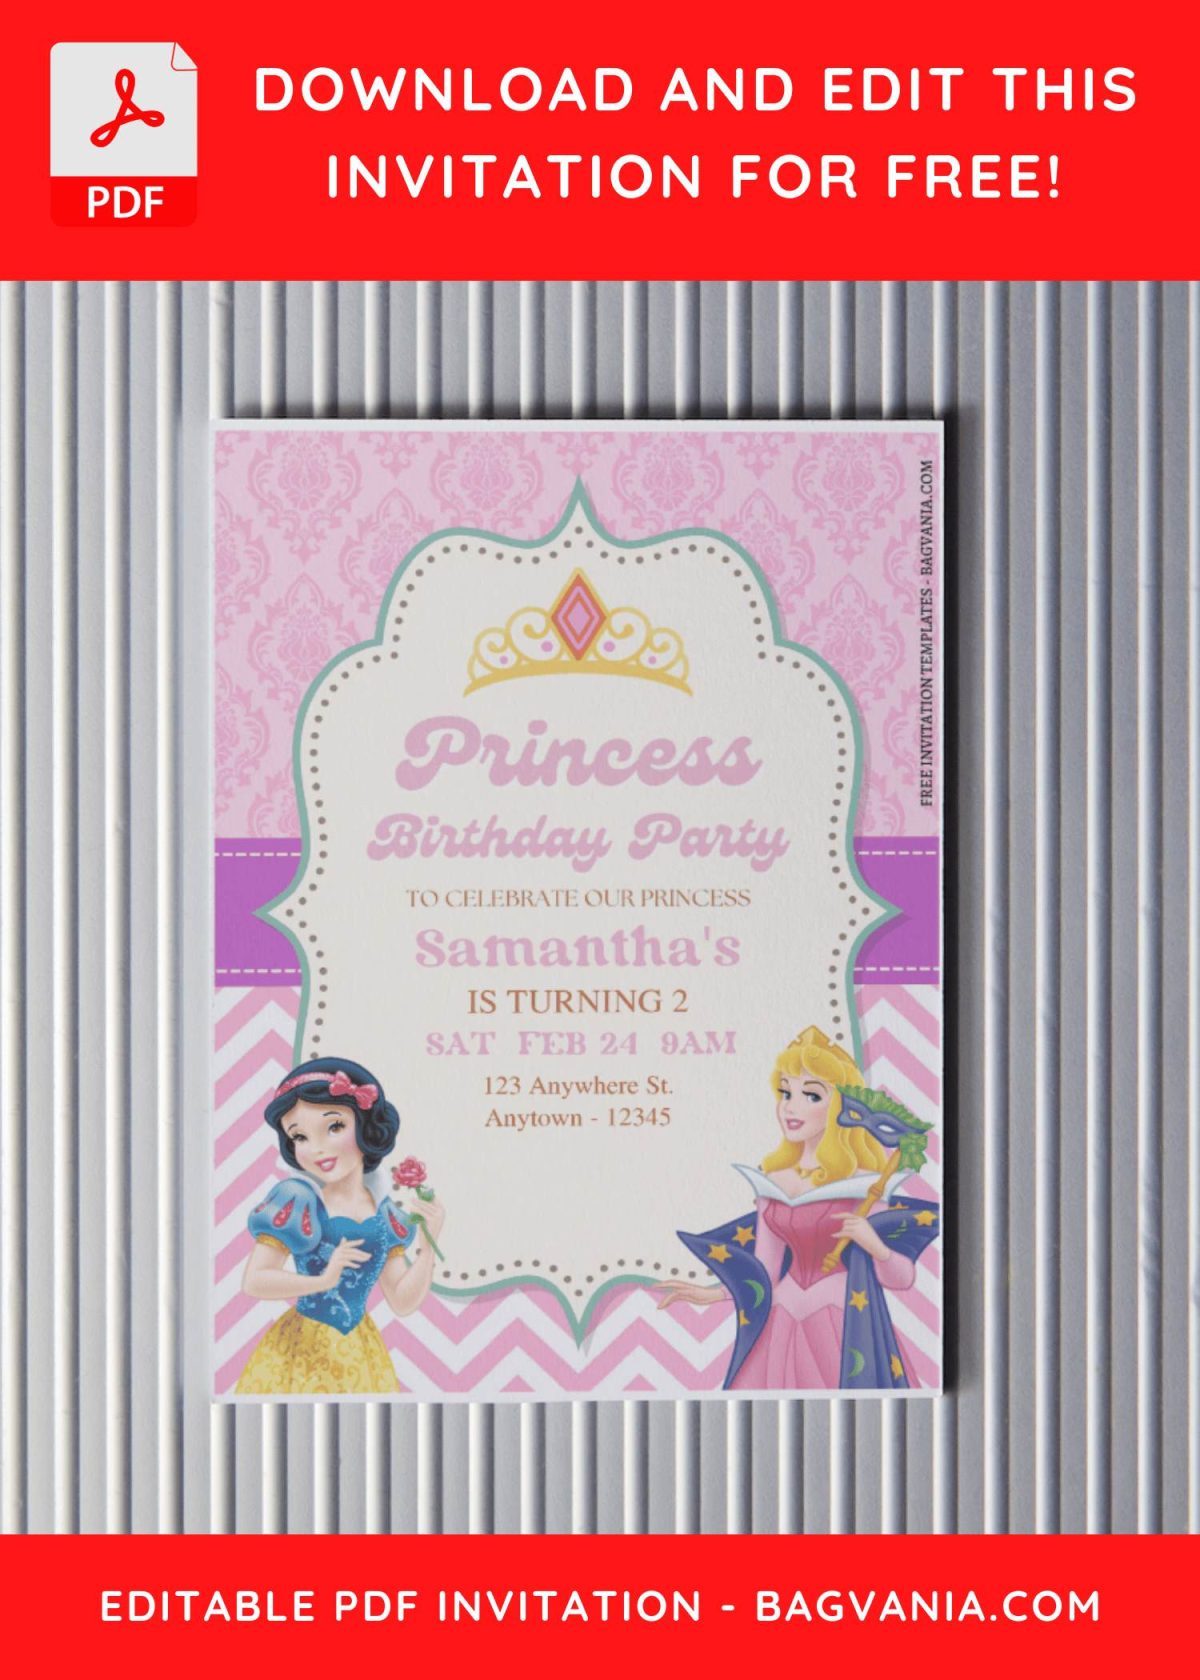 (Free Editable PDF) Disney Princess Party Magic Birthday Invitation Templates with snow white